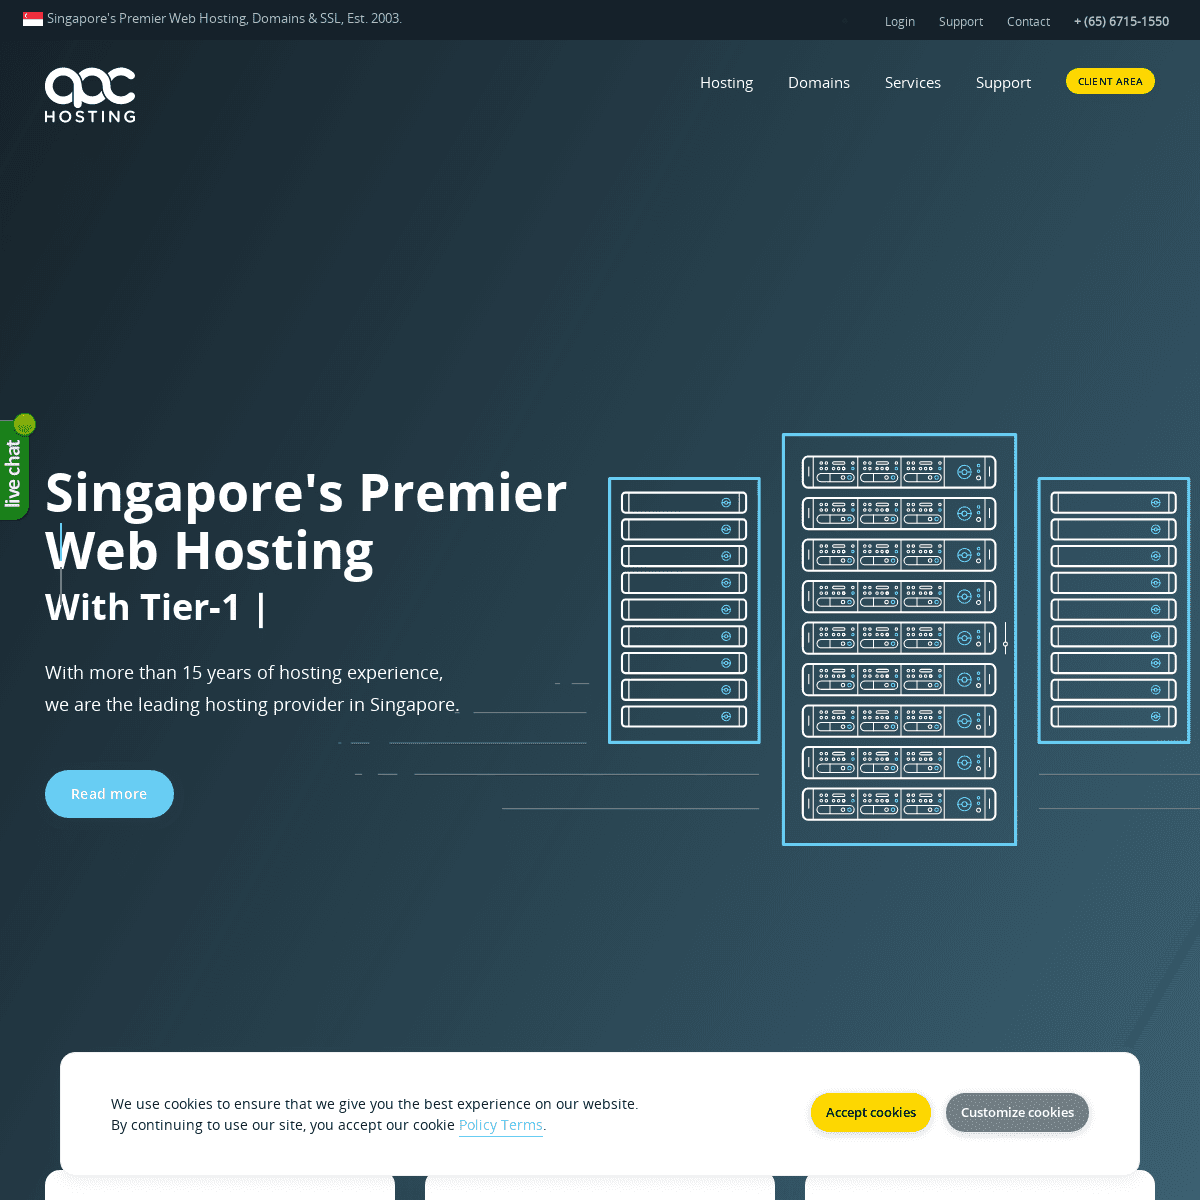 APC Hosting - Singapore's Premier Web Hosting, Domains & SSL